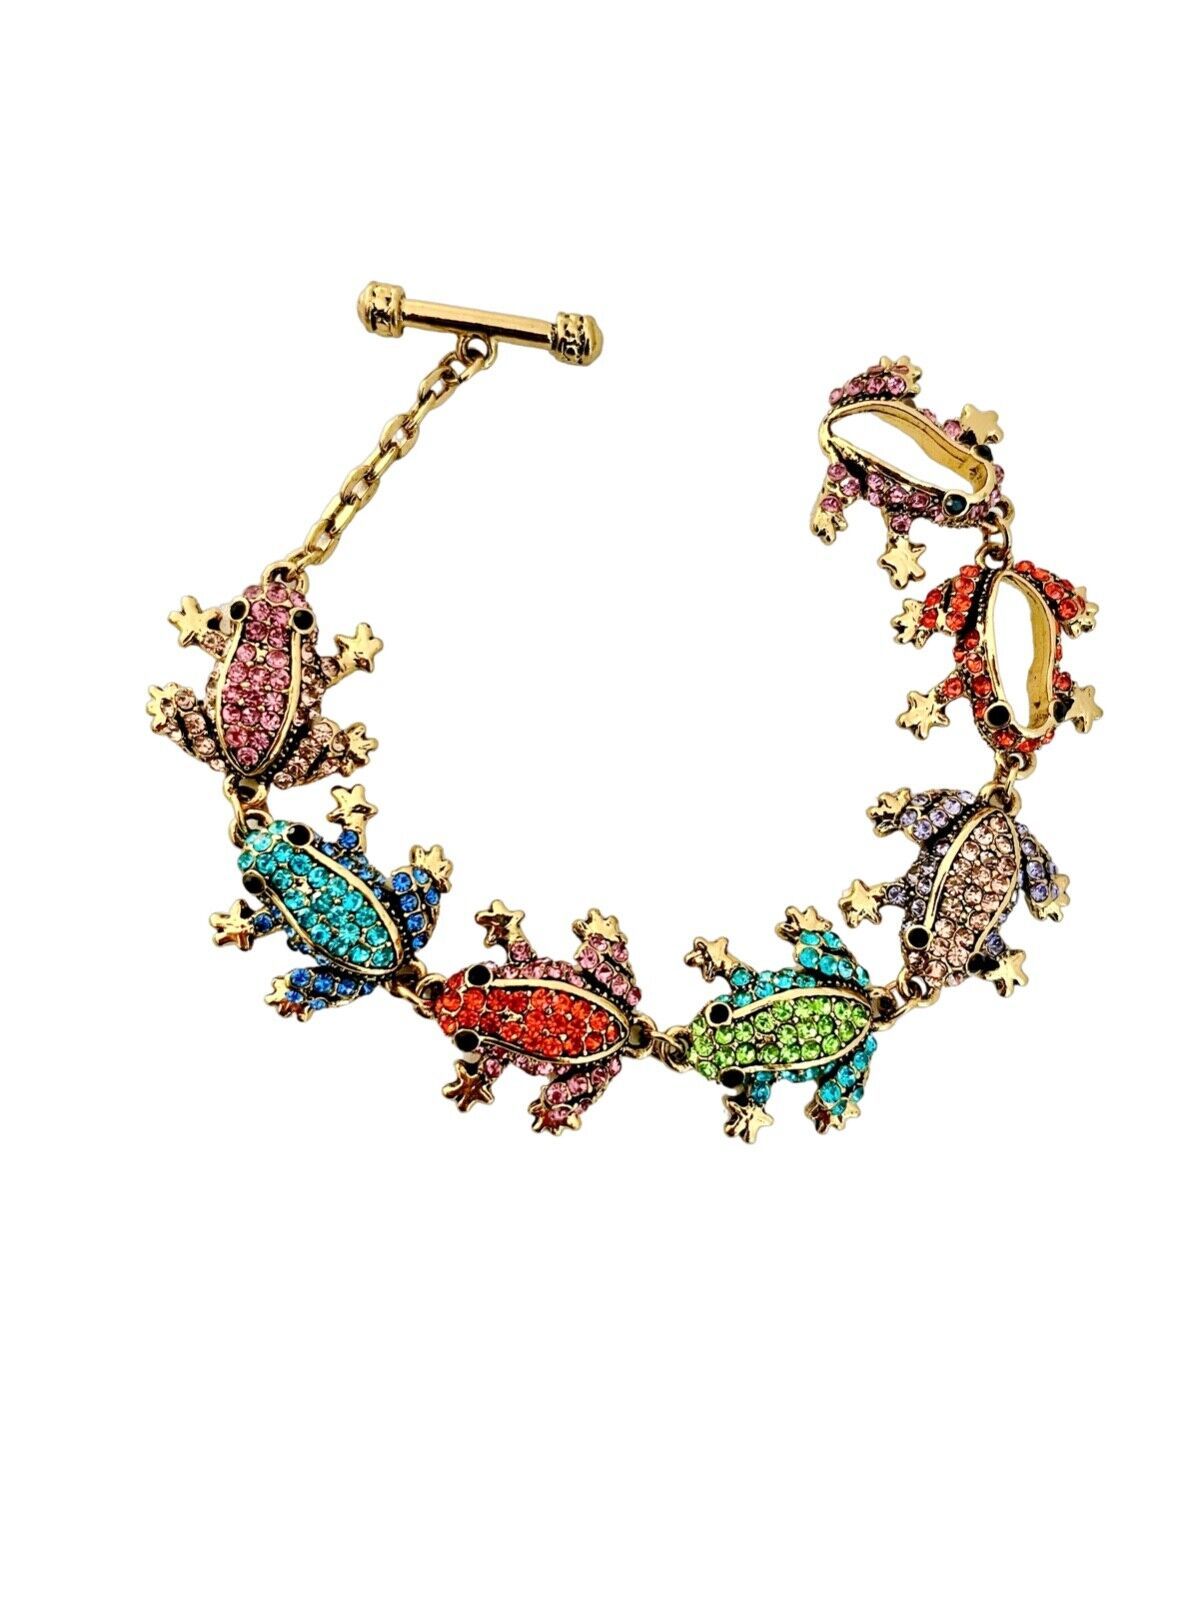 Primary image for Multicolor Crystals Rhinestones Fun Cute Golden Frogs Segmented Toggle Bracelet